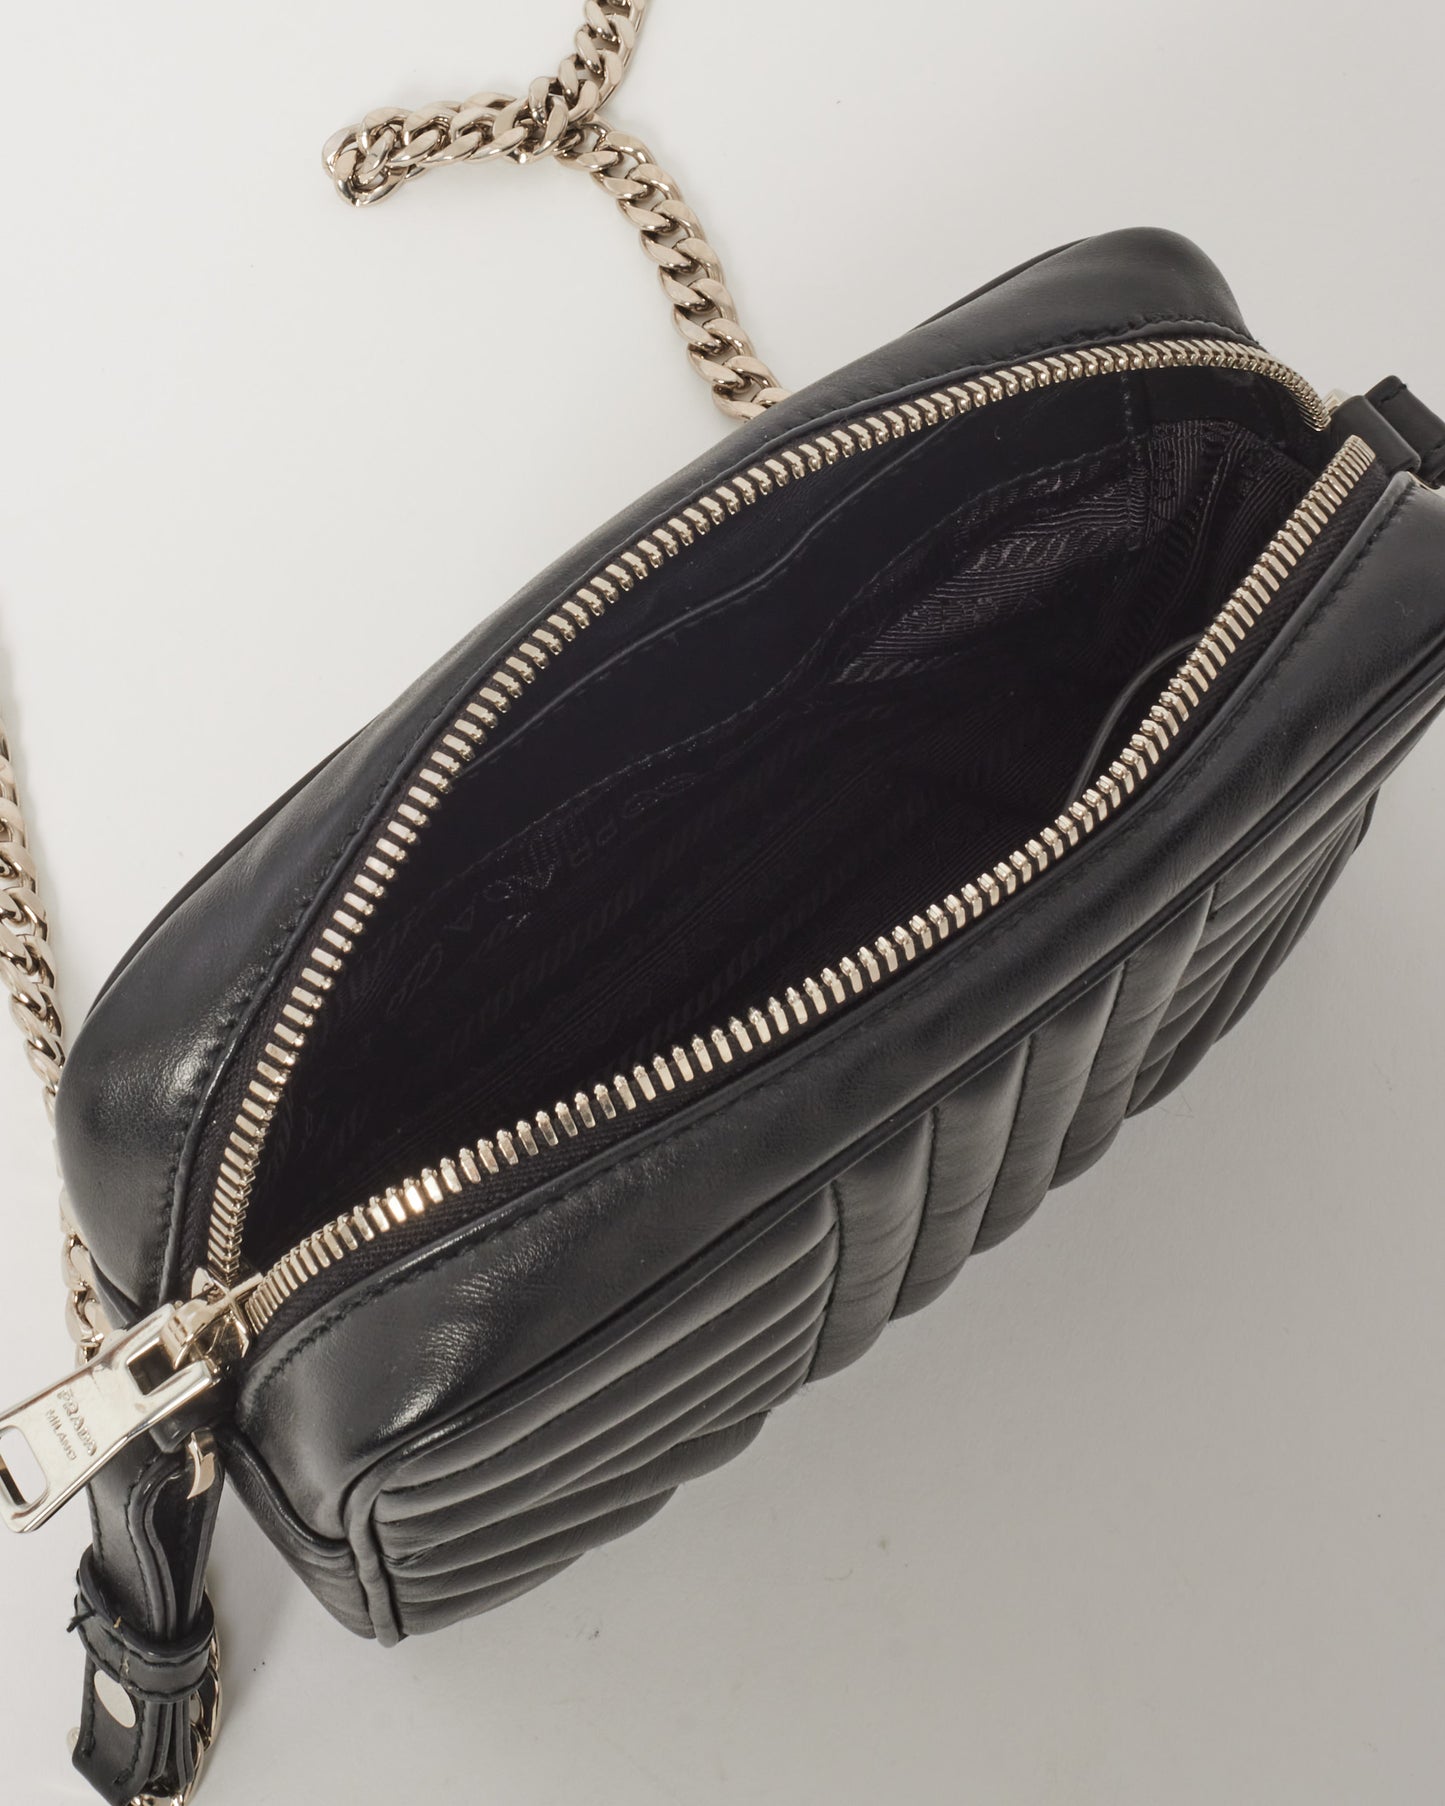 Prada Black Calfskin Leather Diagramme Camera Bag